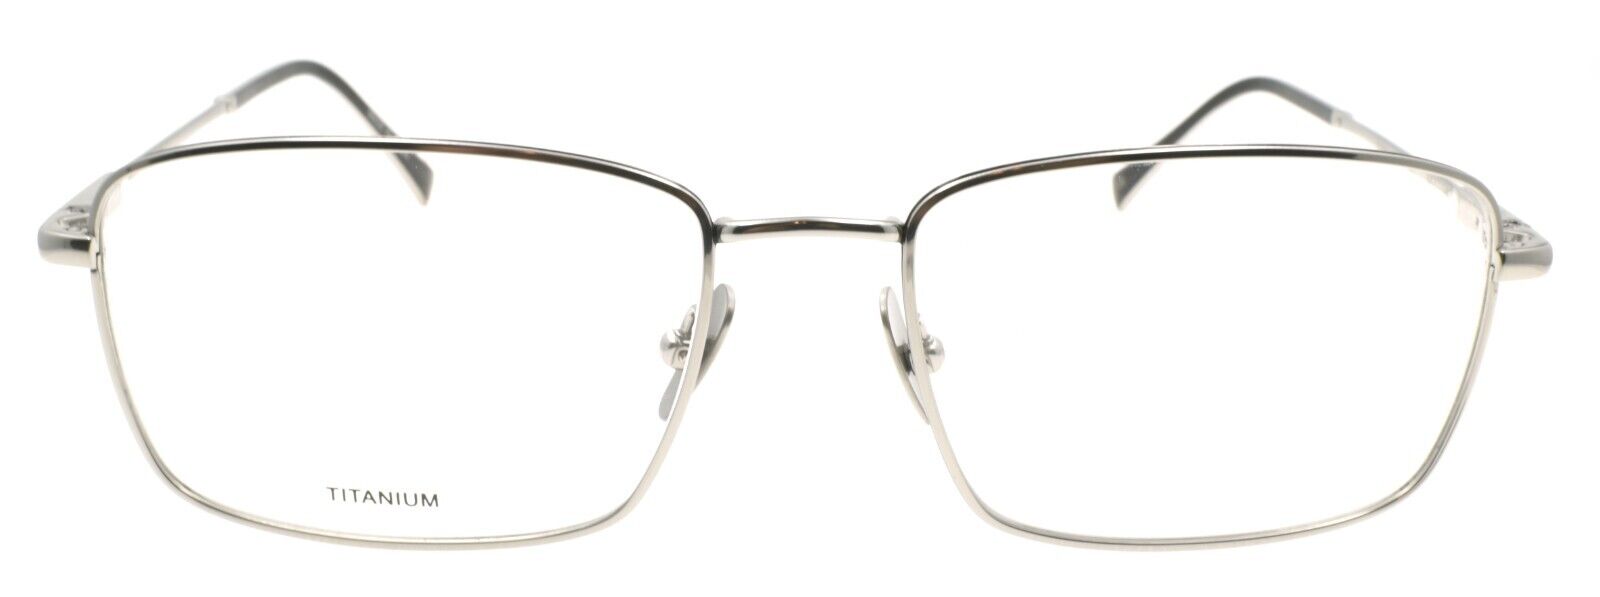 2-John Varvatos V184 Men's Eyeglasses Frames Titanium 54-17-145 Silver Japan-751286343342-IKSpecs